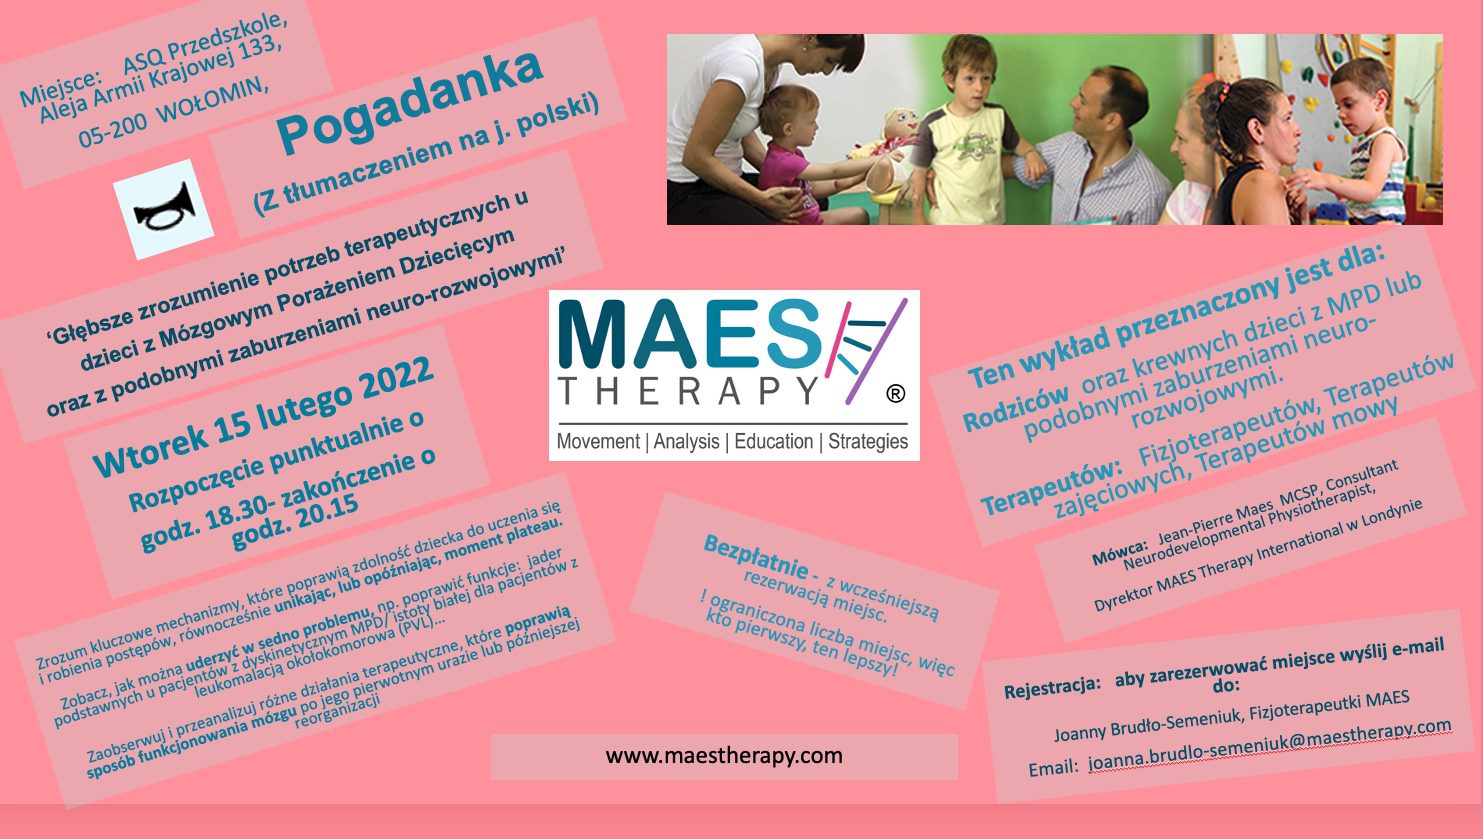 M.A.E.S. Therapy Information Seminar – Warsaw, Poland 2022